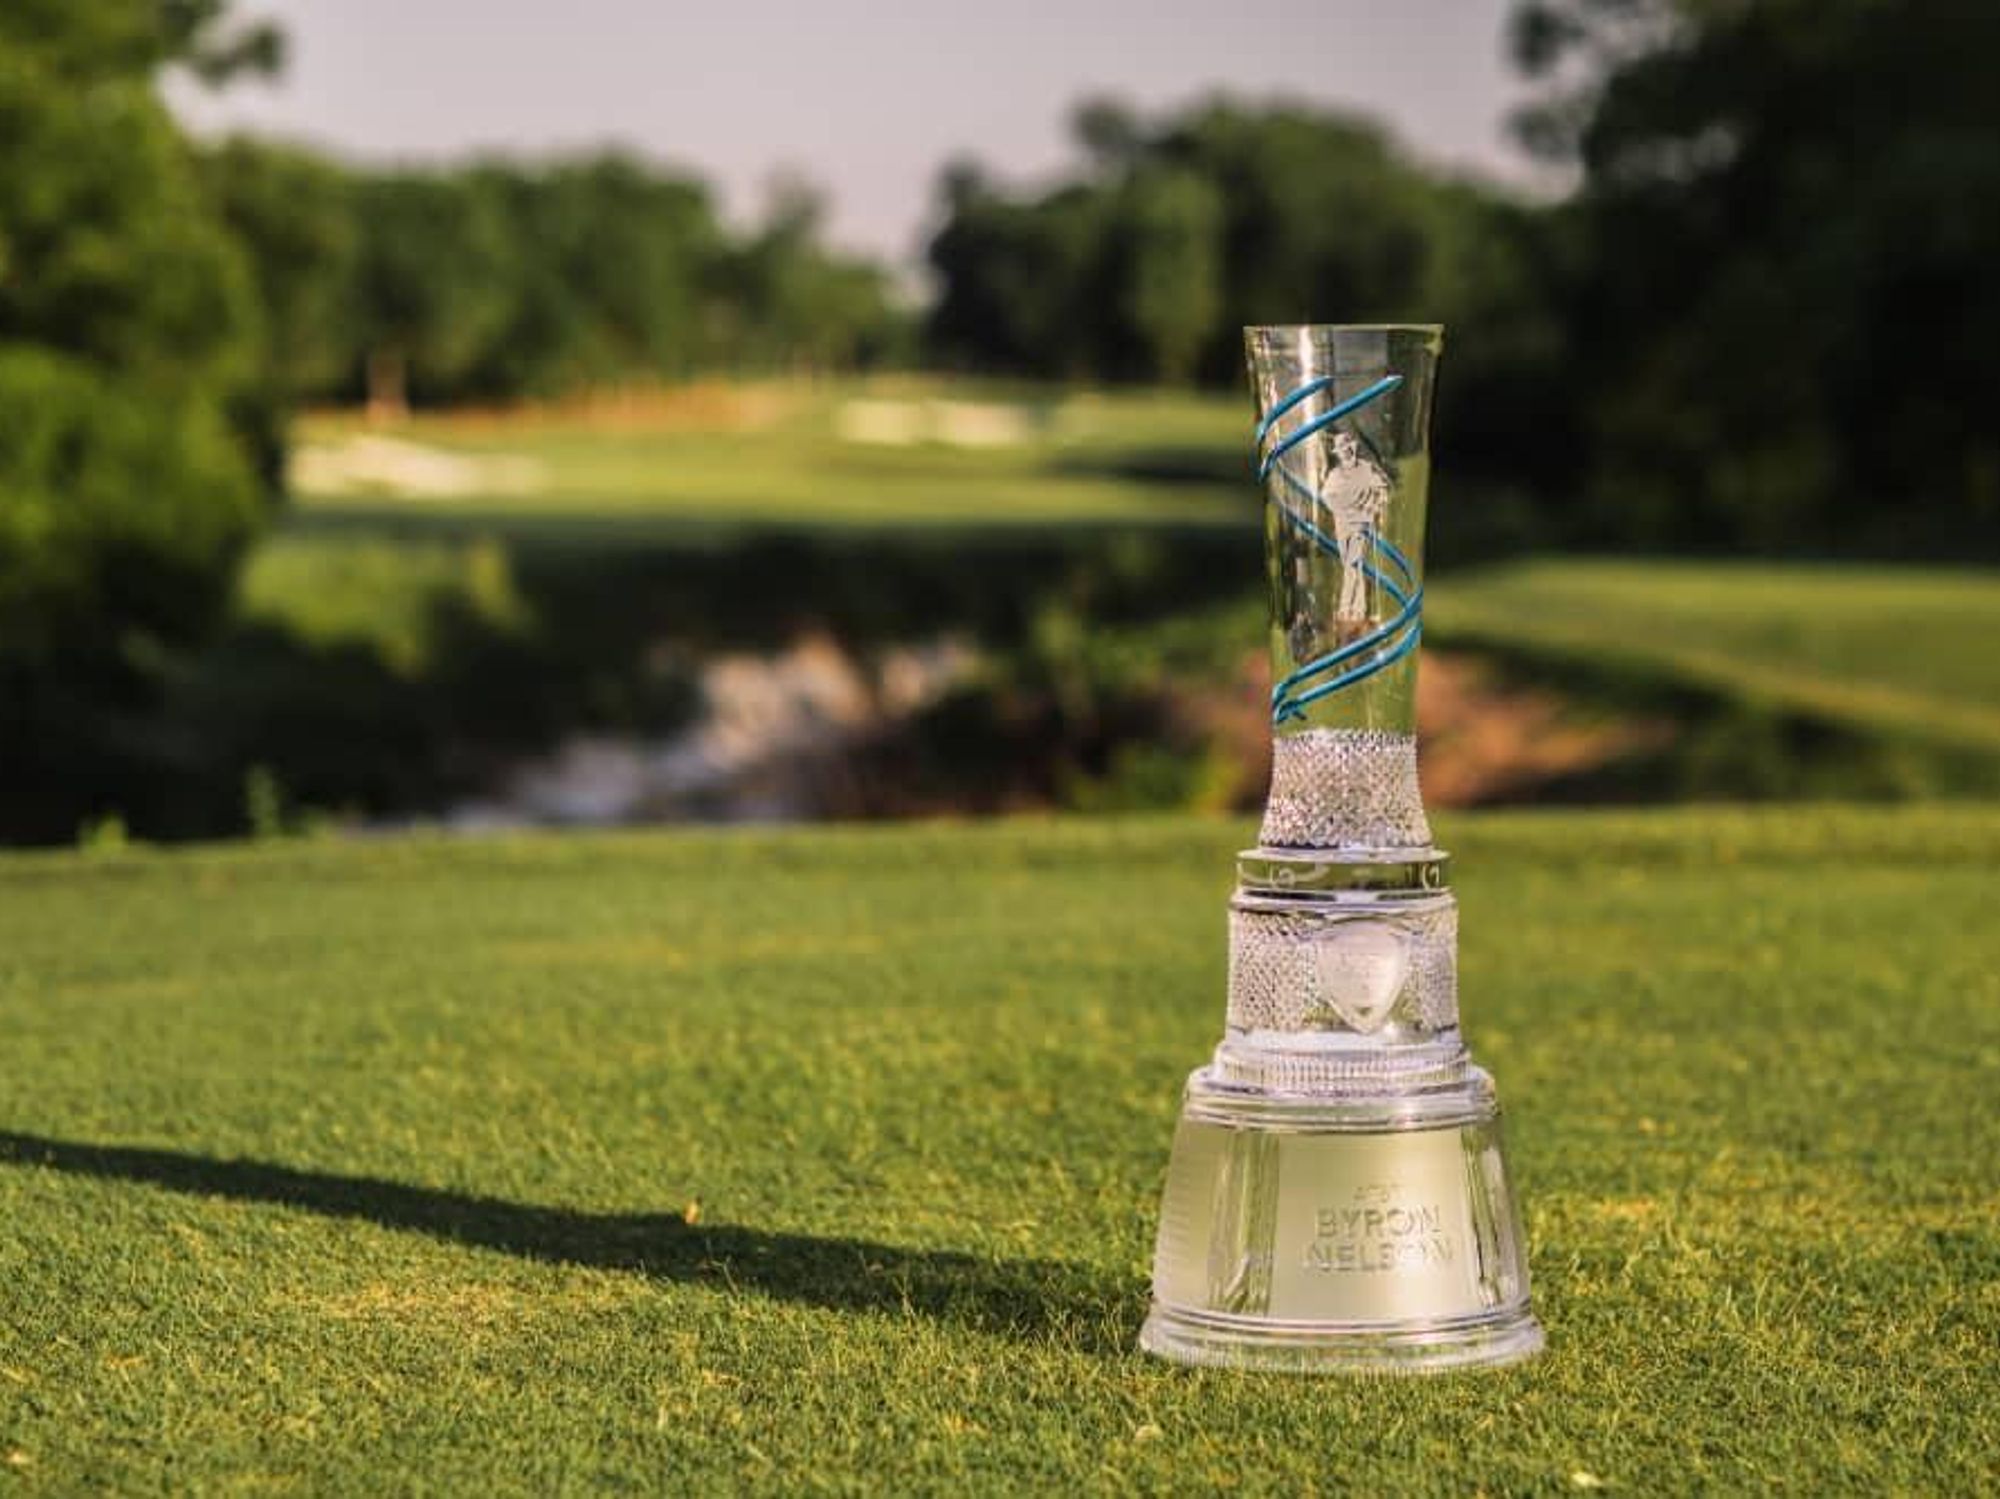 Byron Nelson trophy on course, PGA Tour